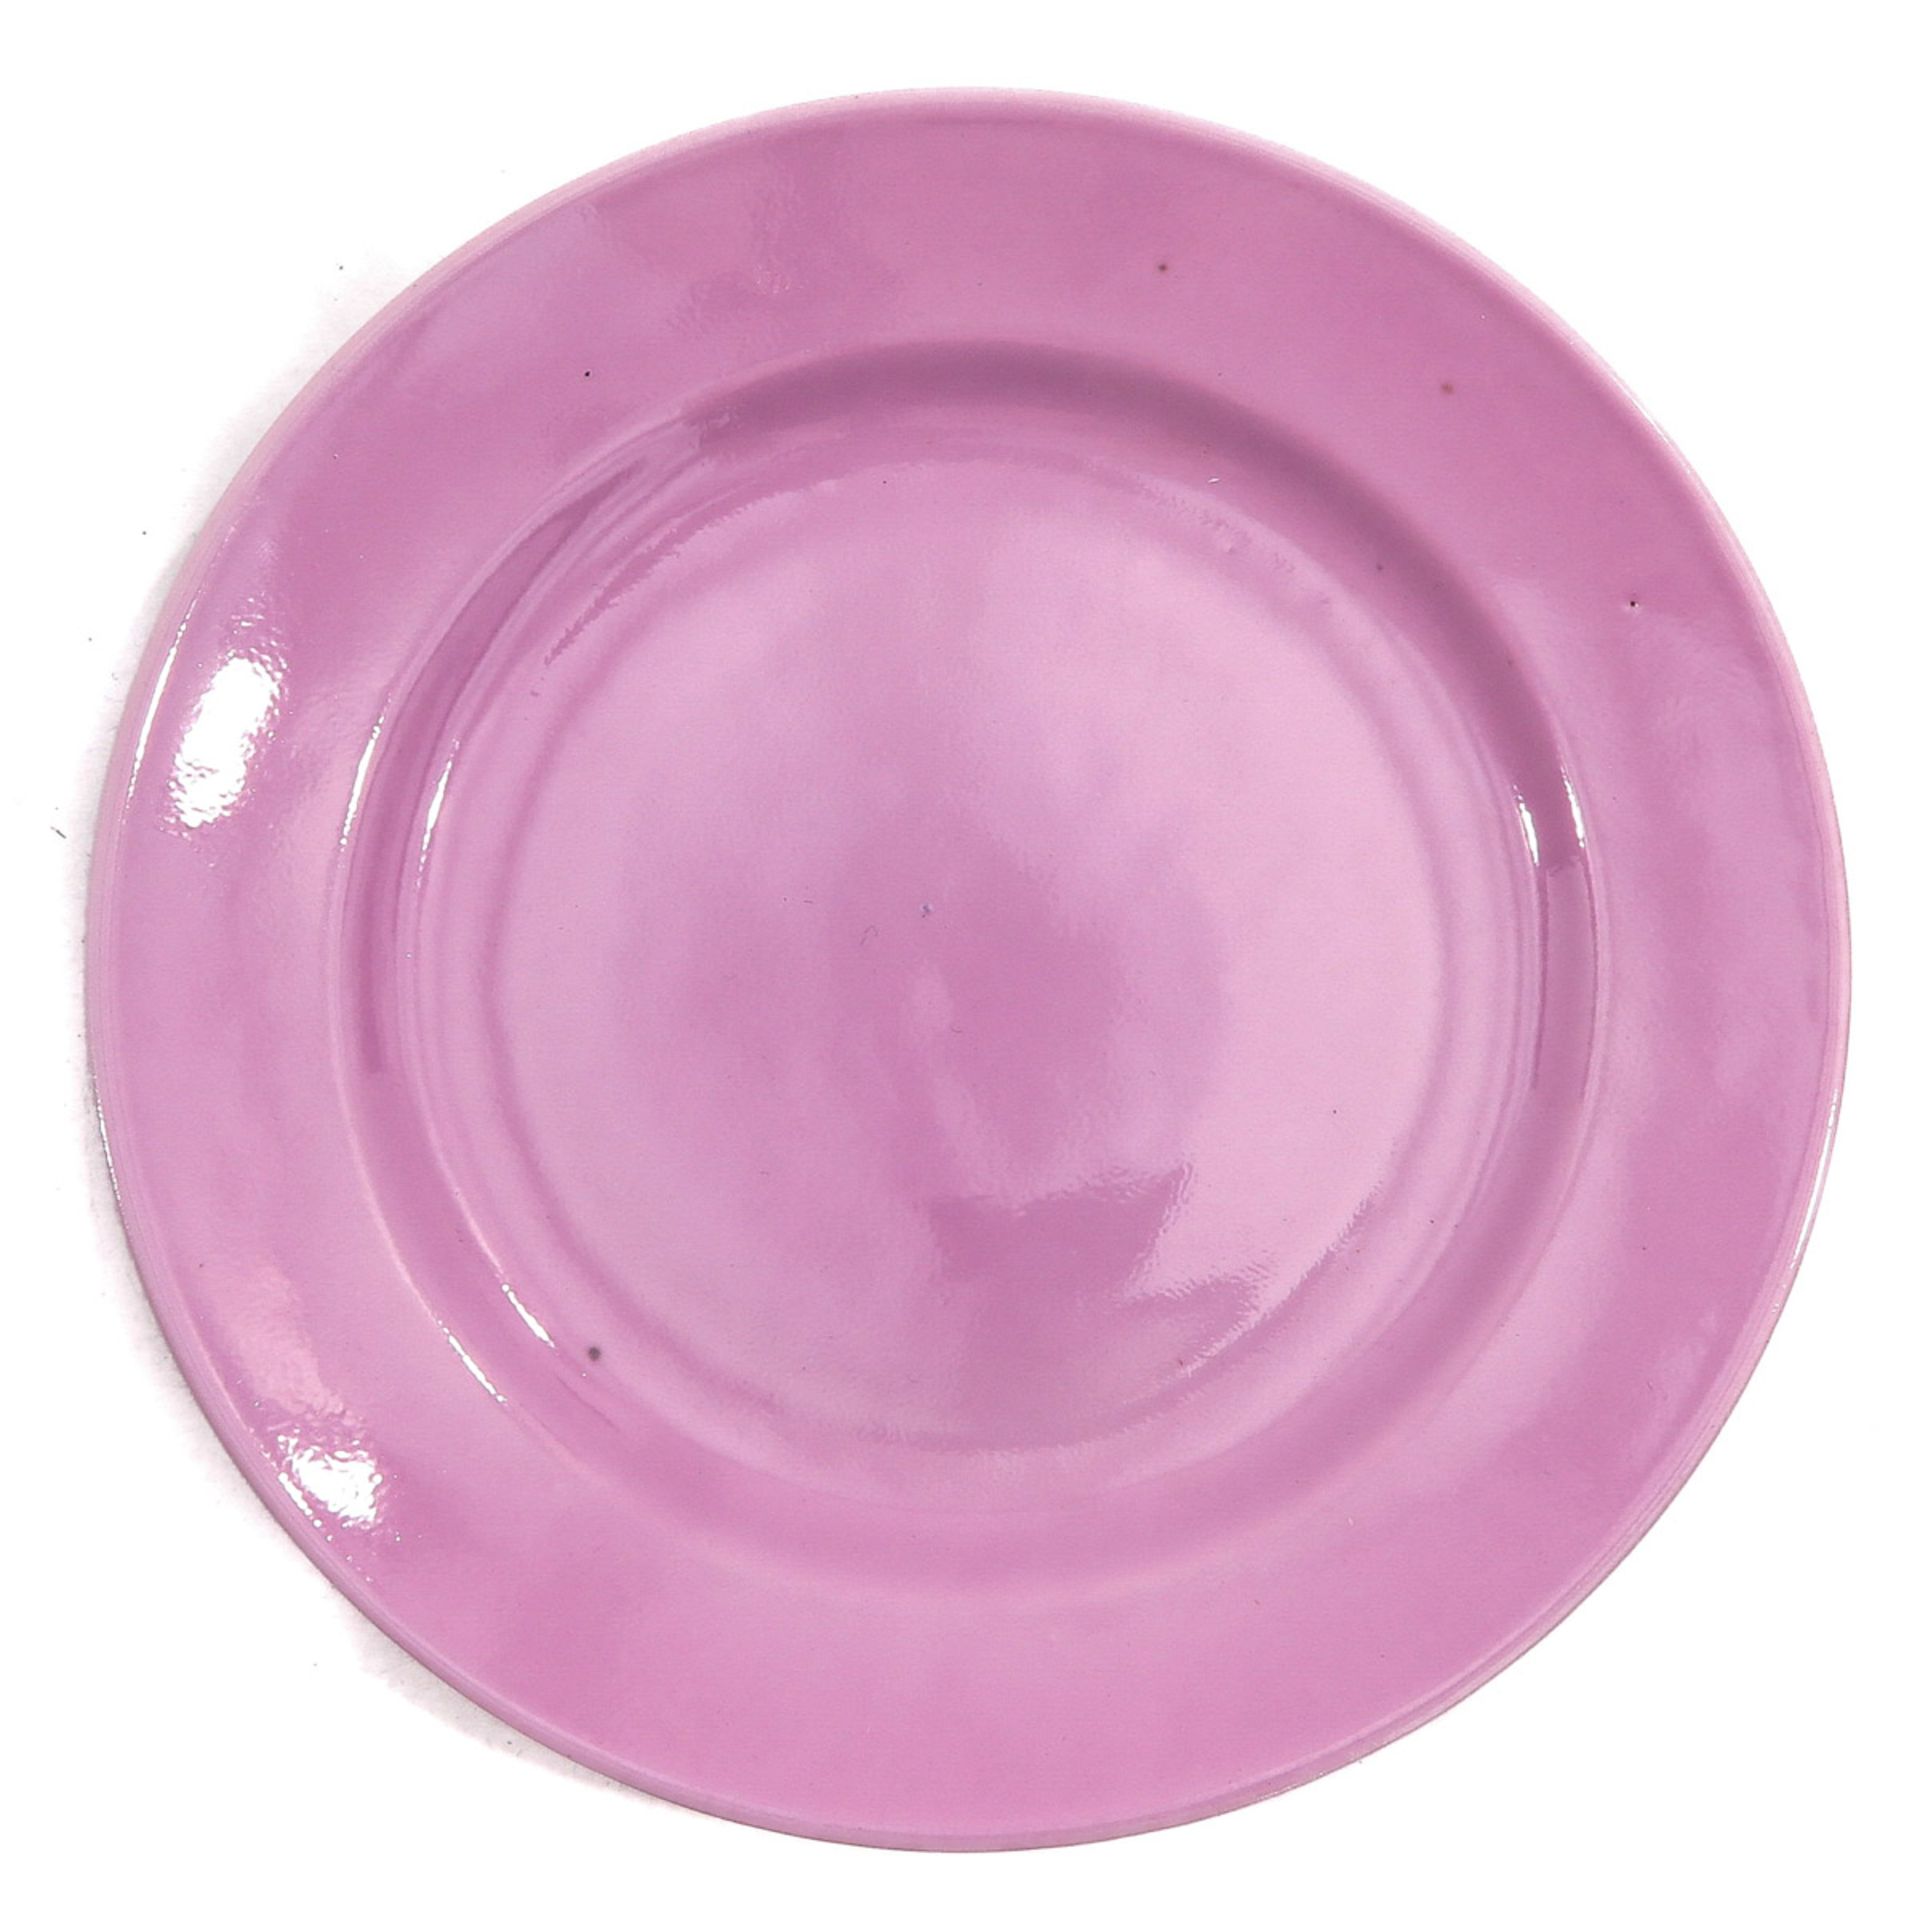 A Pink Glazed Plate